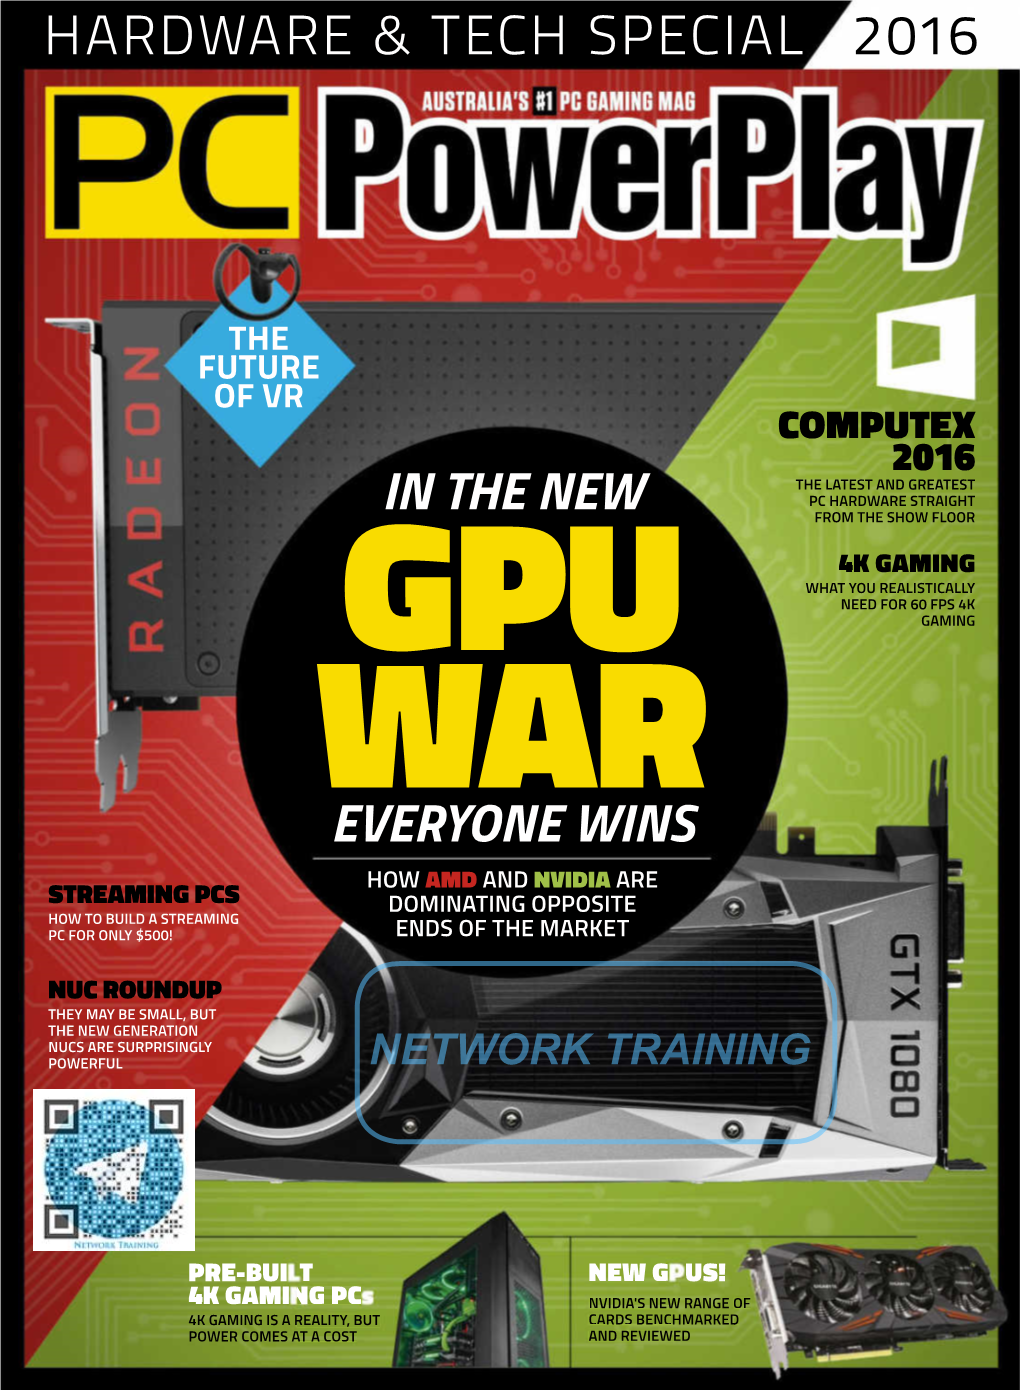 PC Powerplay Hardware & Tech Special